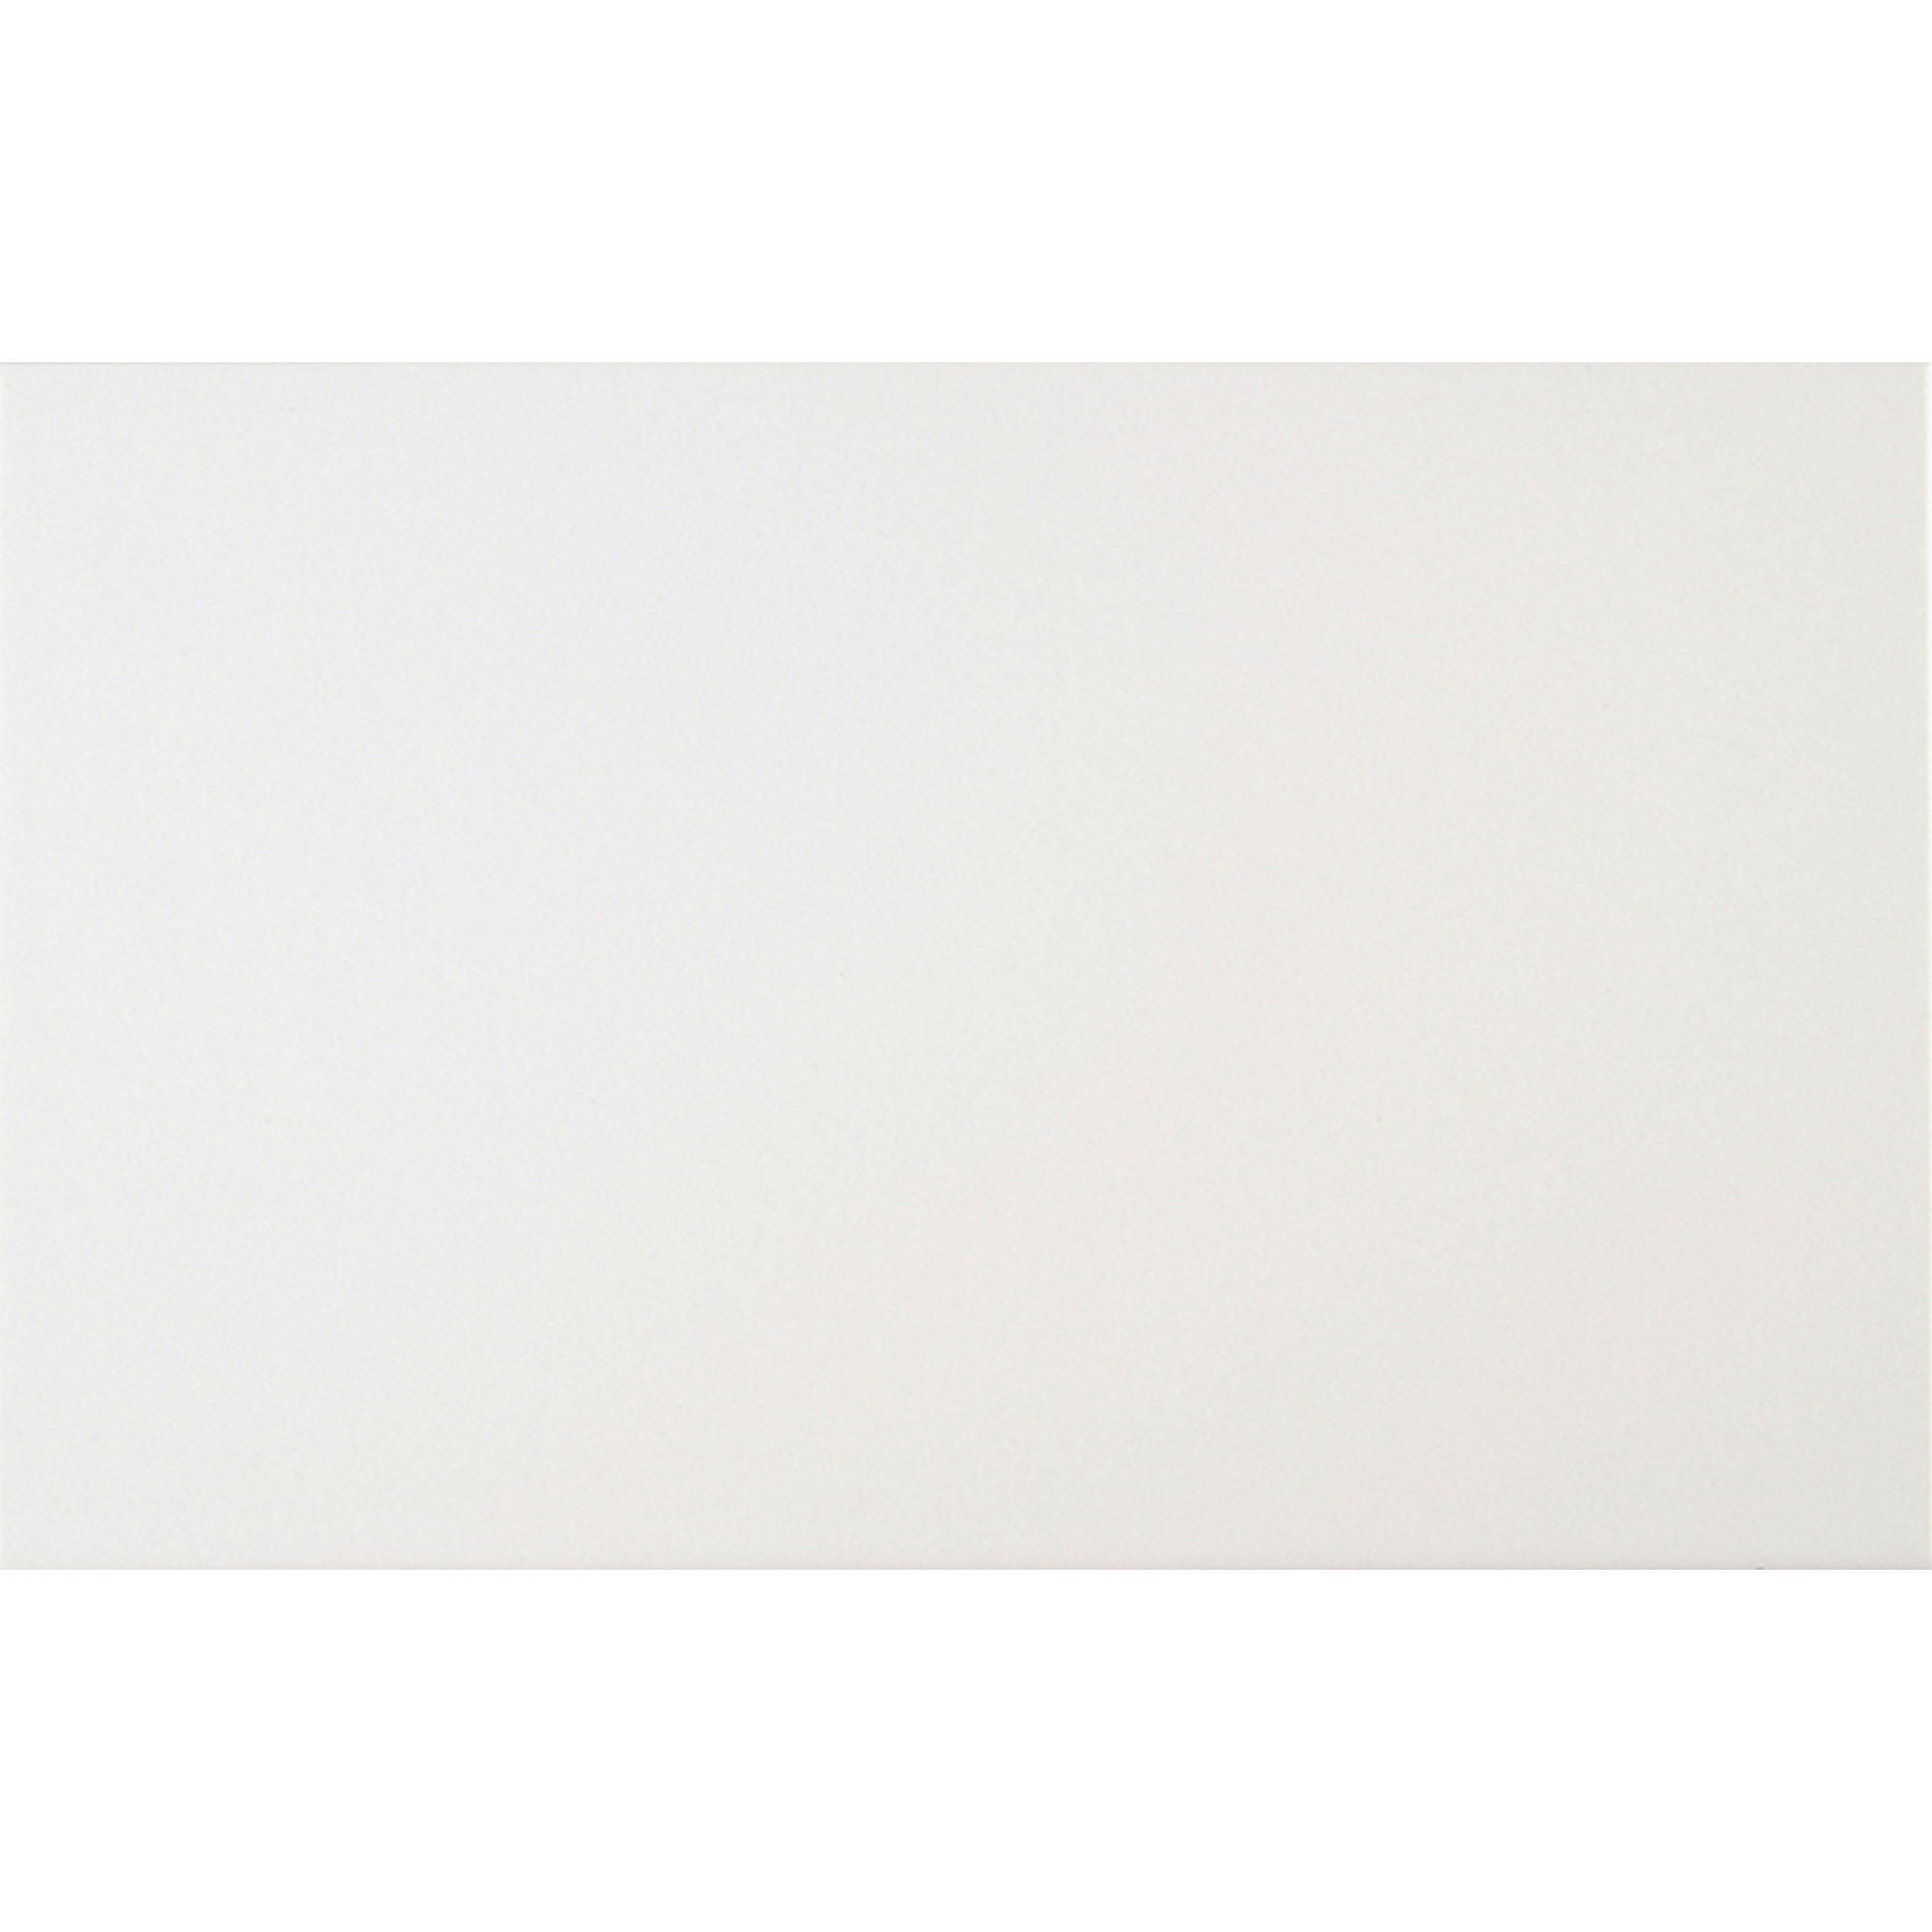 Wandfliese 'White' Steingut glossy glänzend 25 x 40 cm + product picture